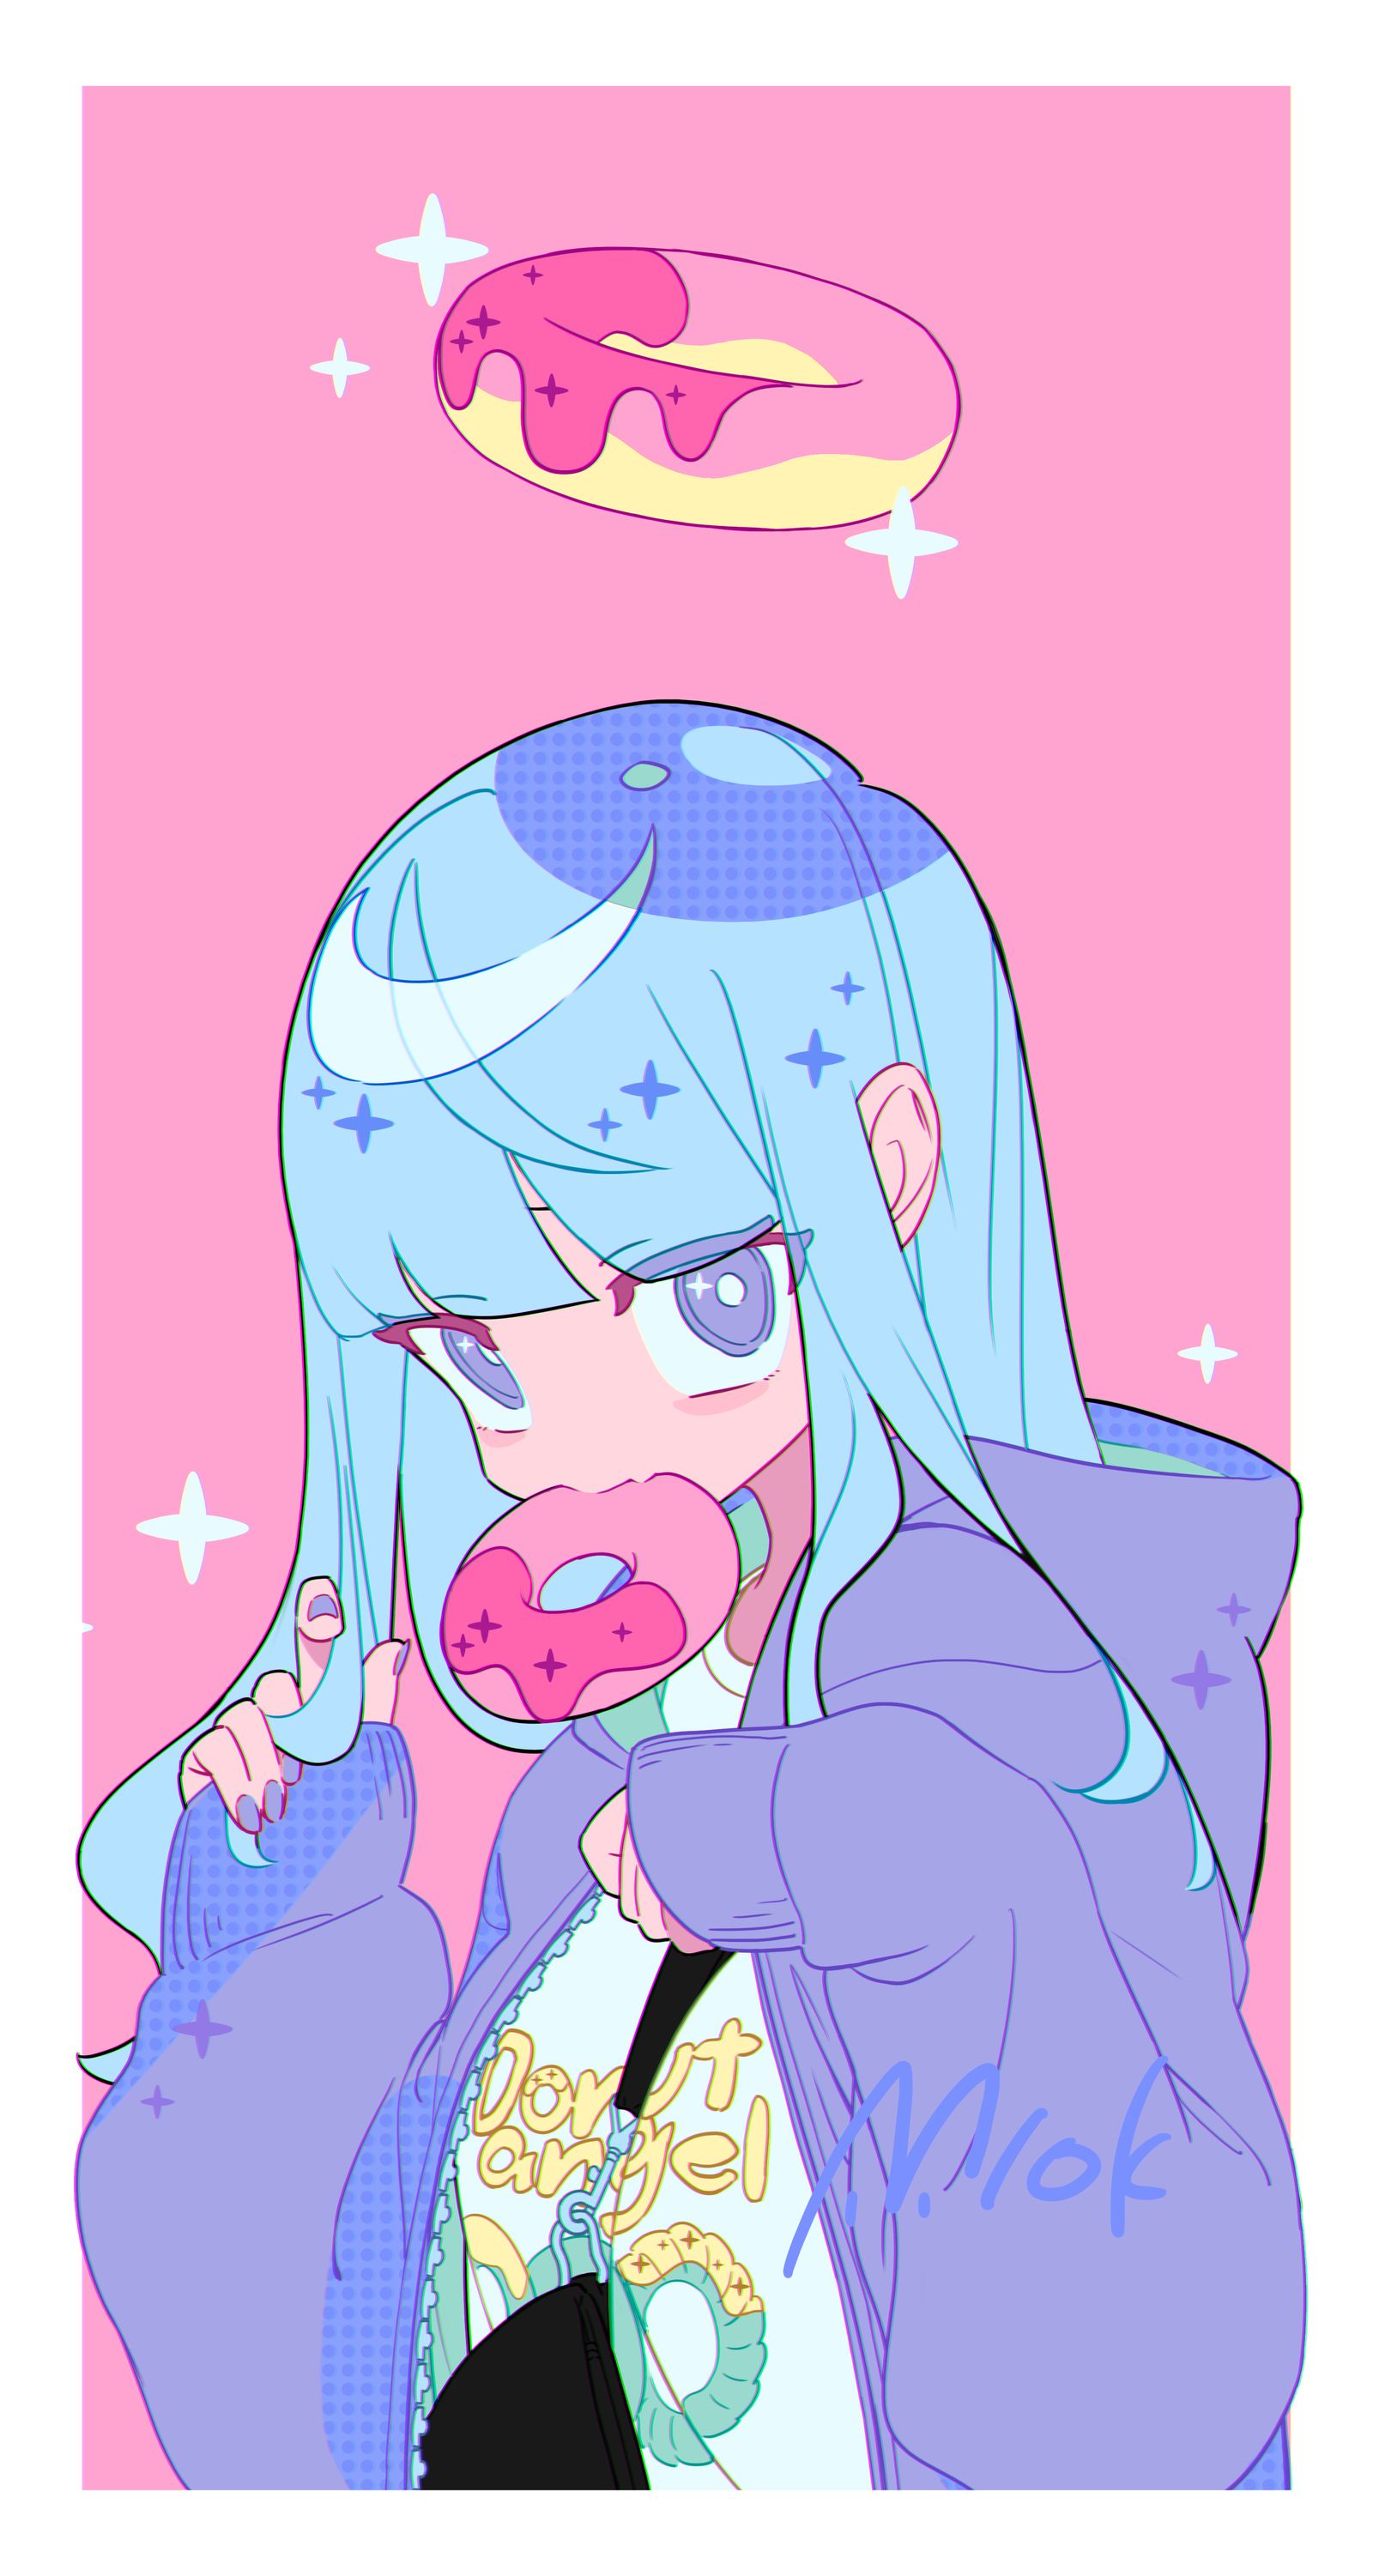 donut angel 